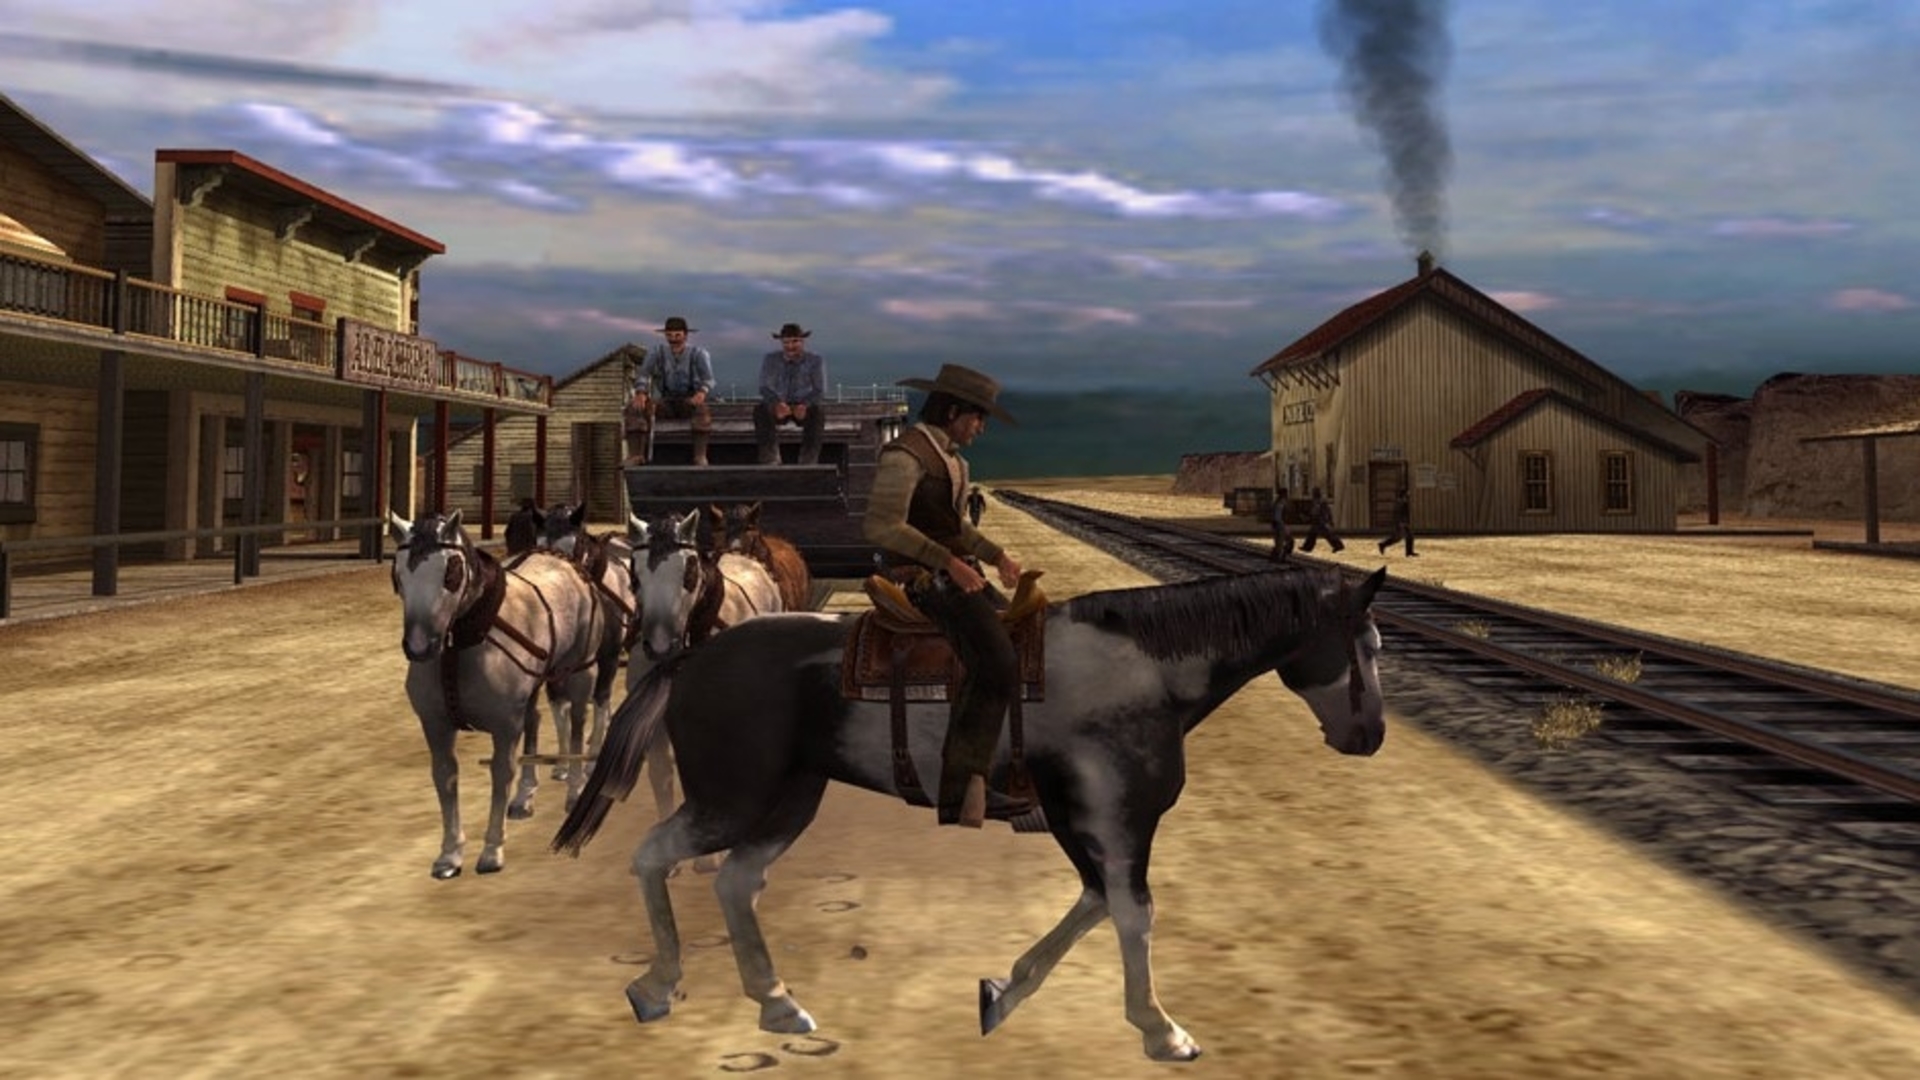 A man on a horse blocks a cart in western game gun